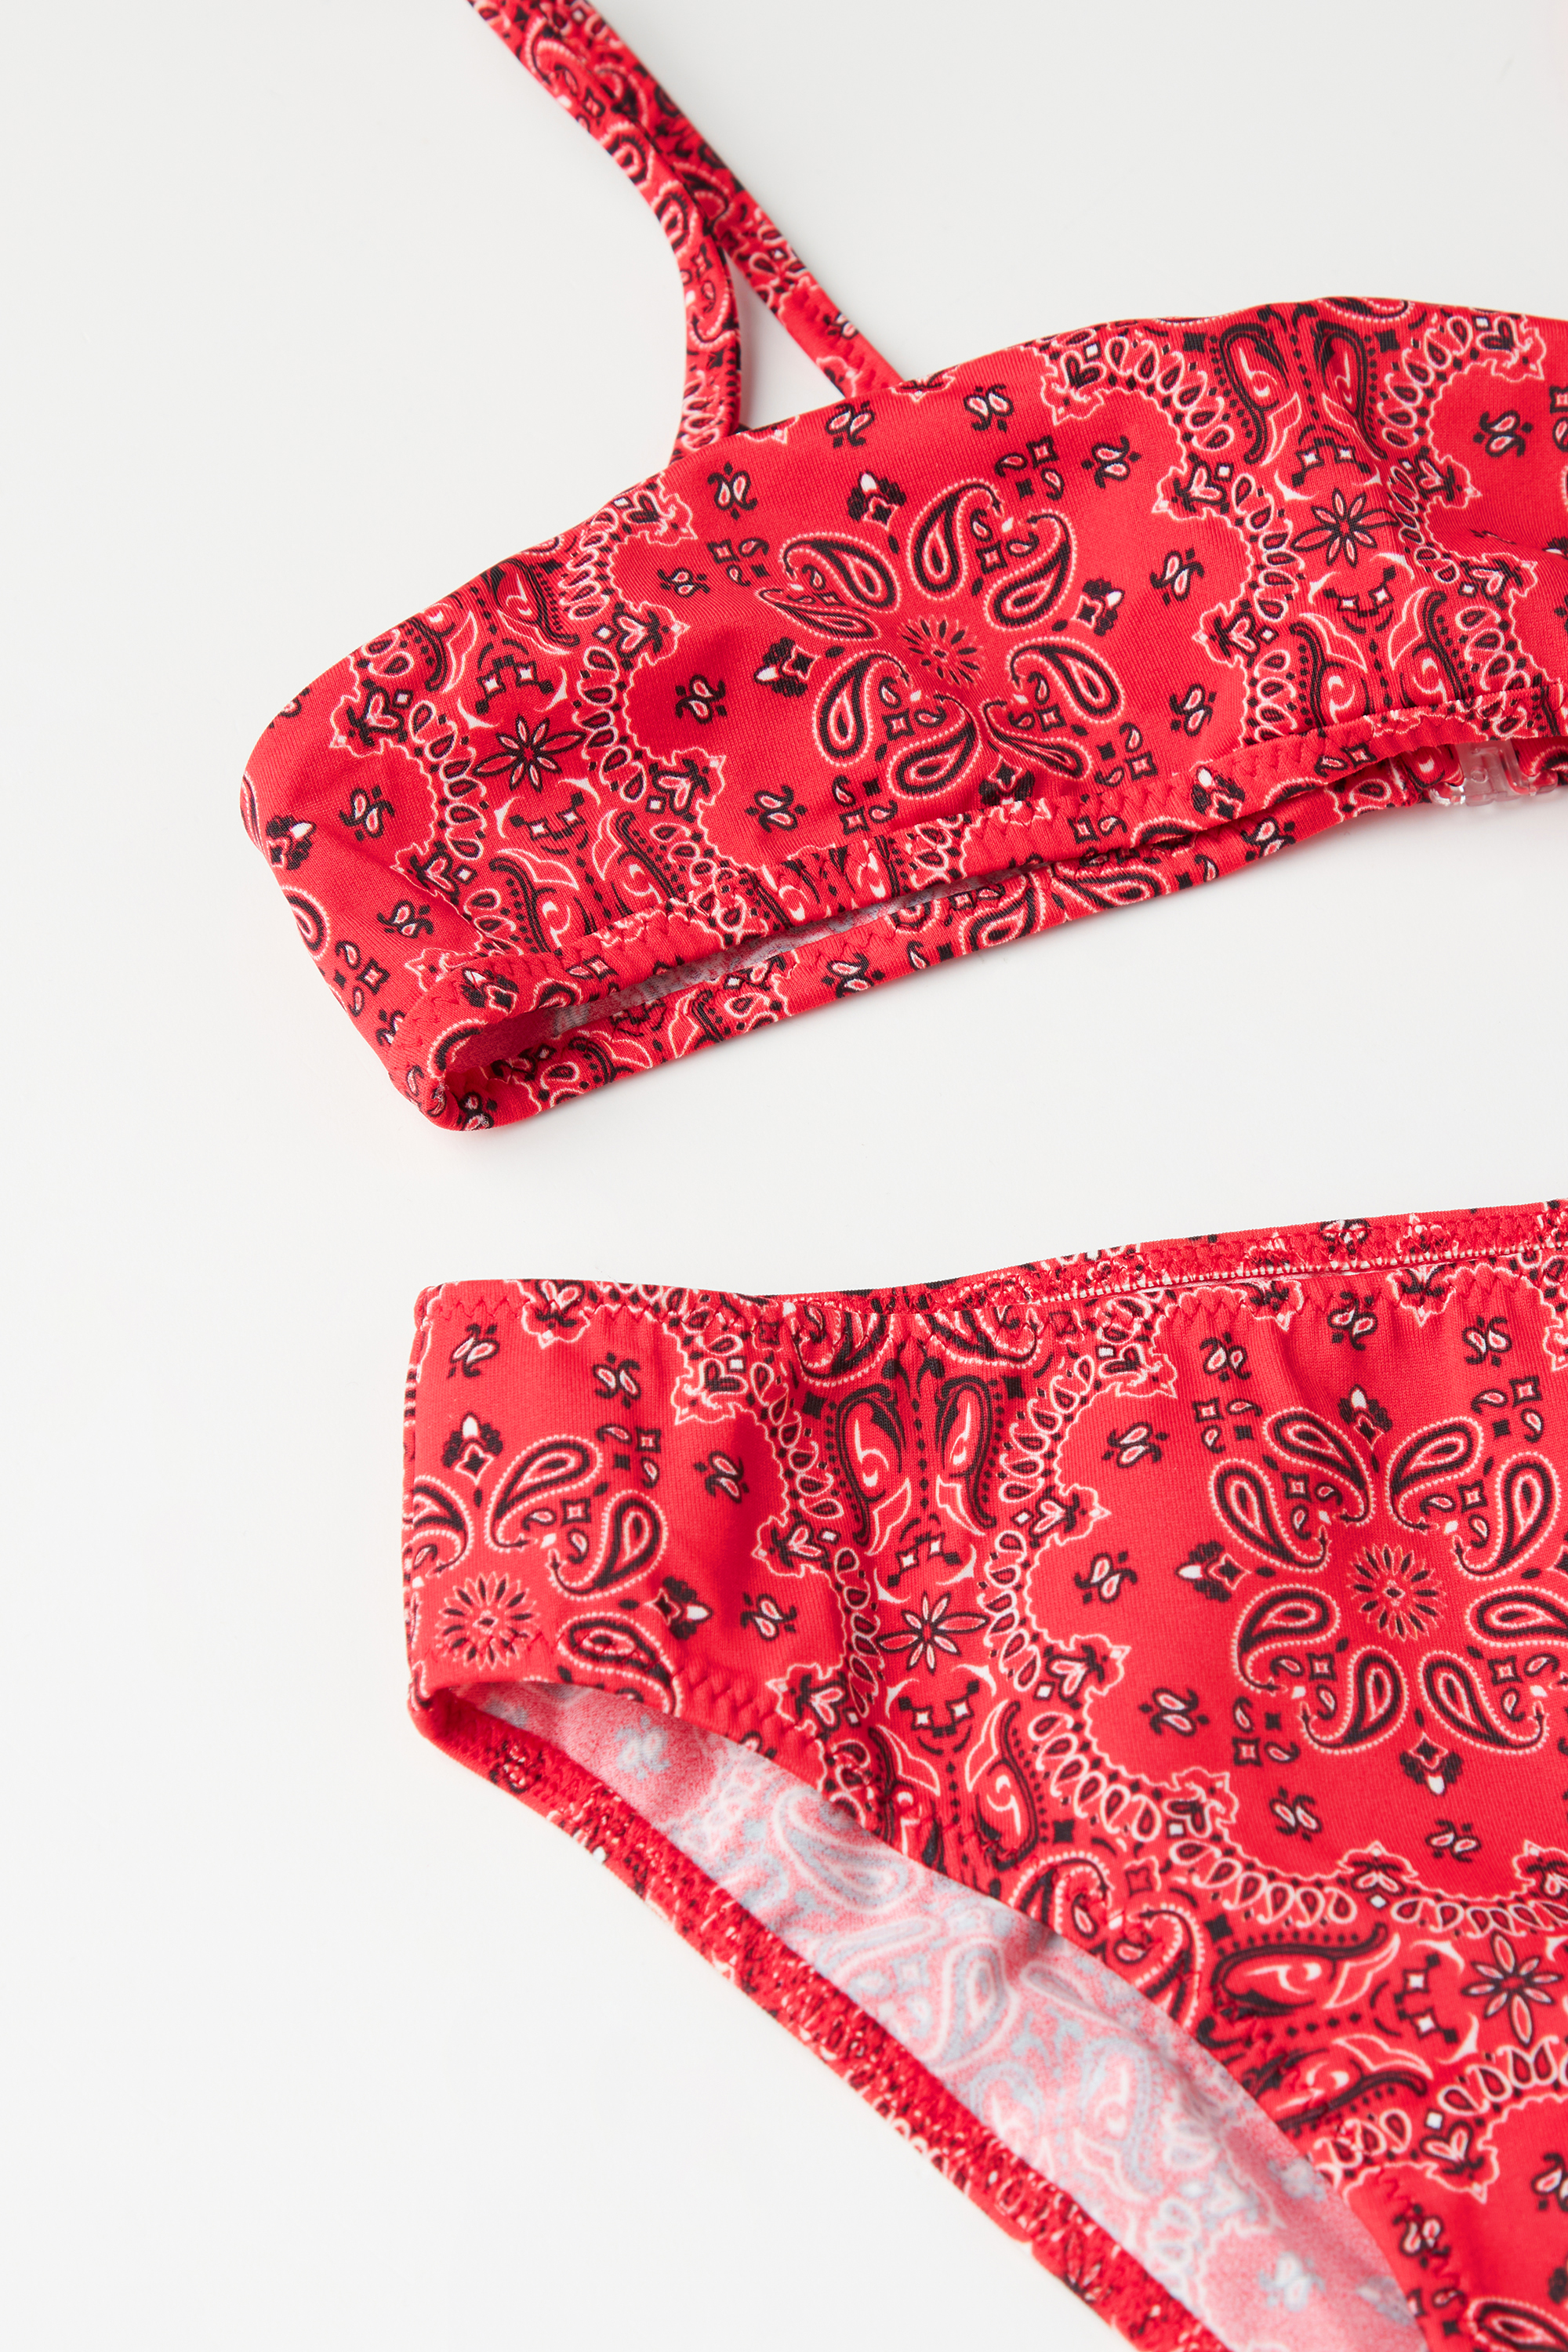 Girls’ Red Bandana Print Bikini Top and Bottoms